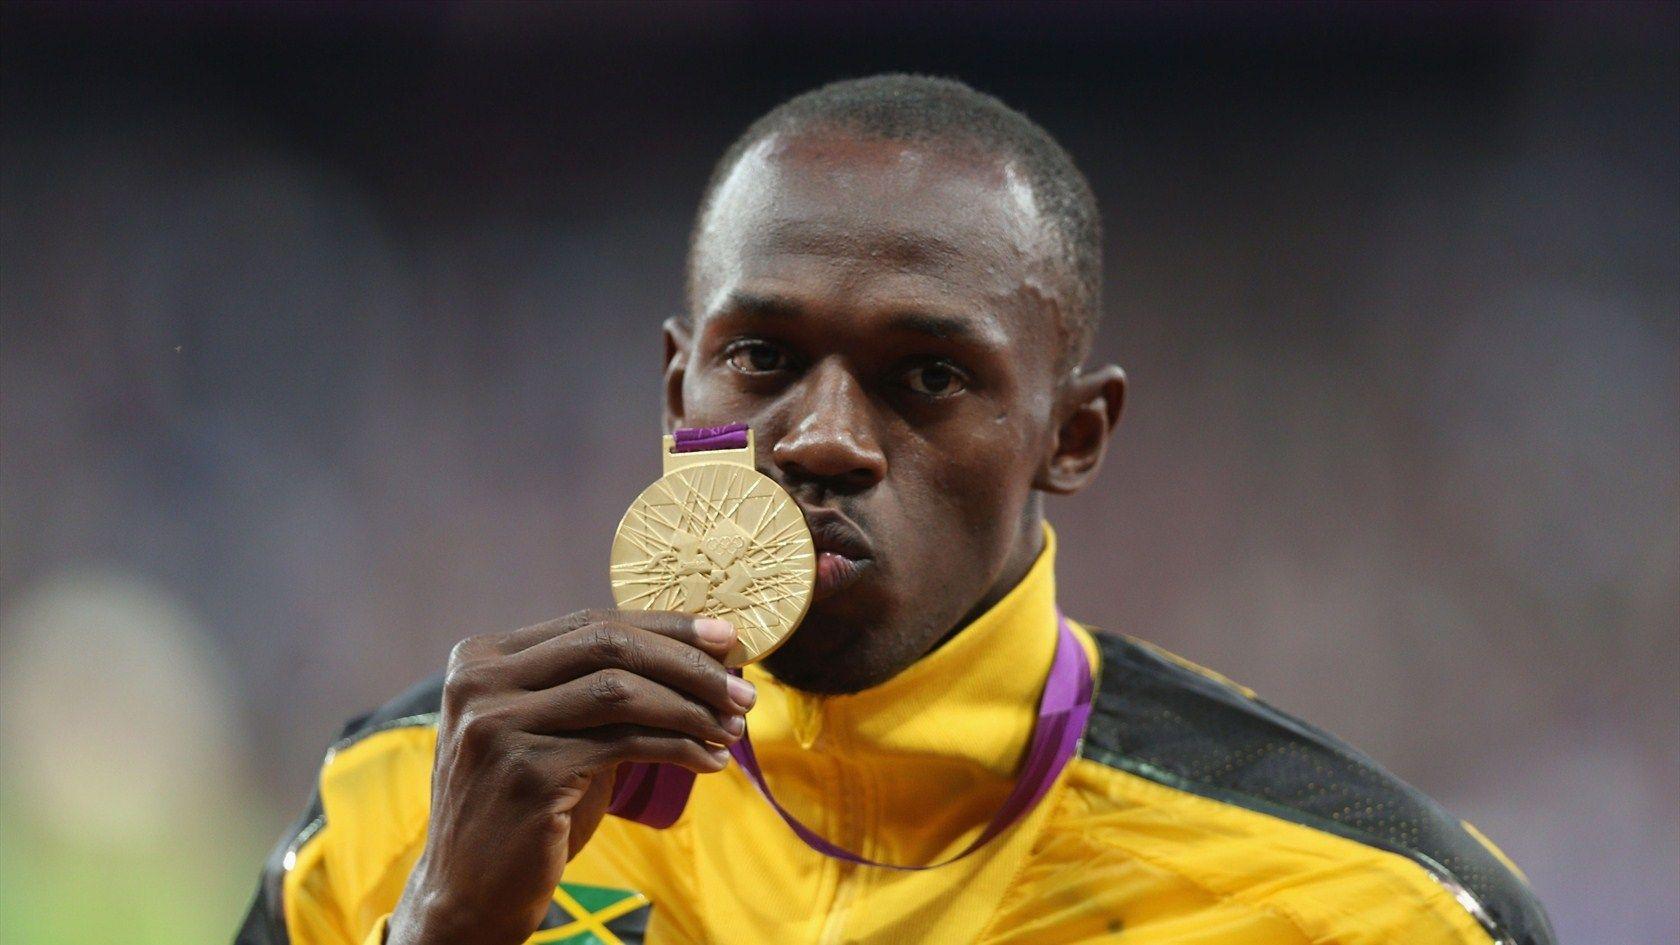 Usain Bolt Atletic Wallpaper. ardiwallpaper